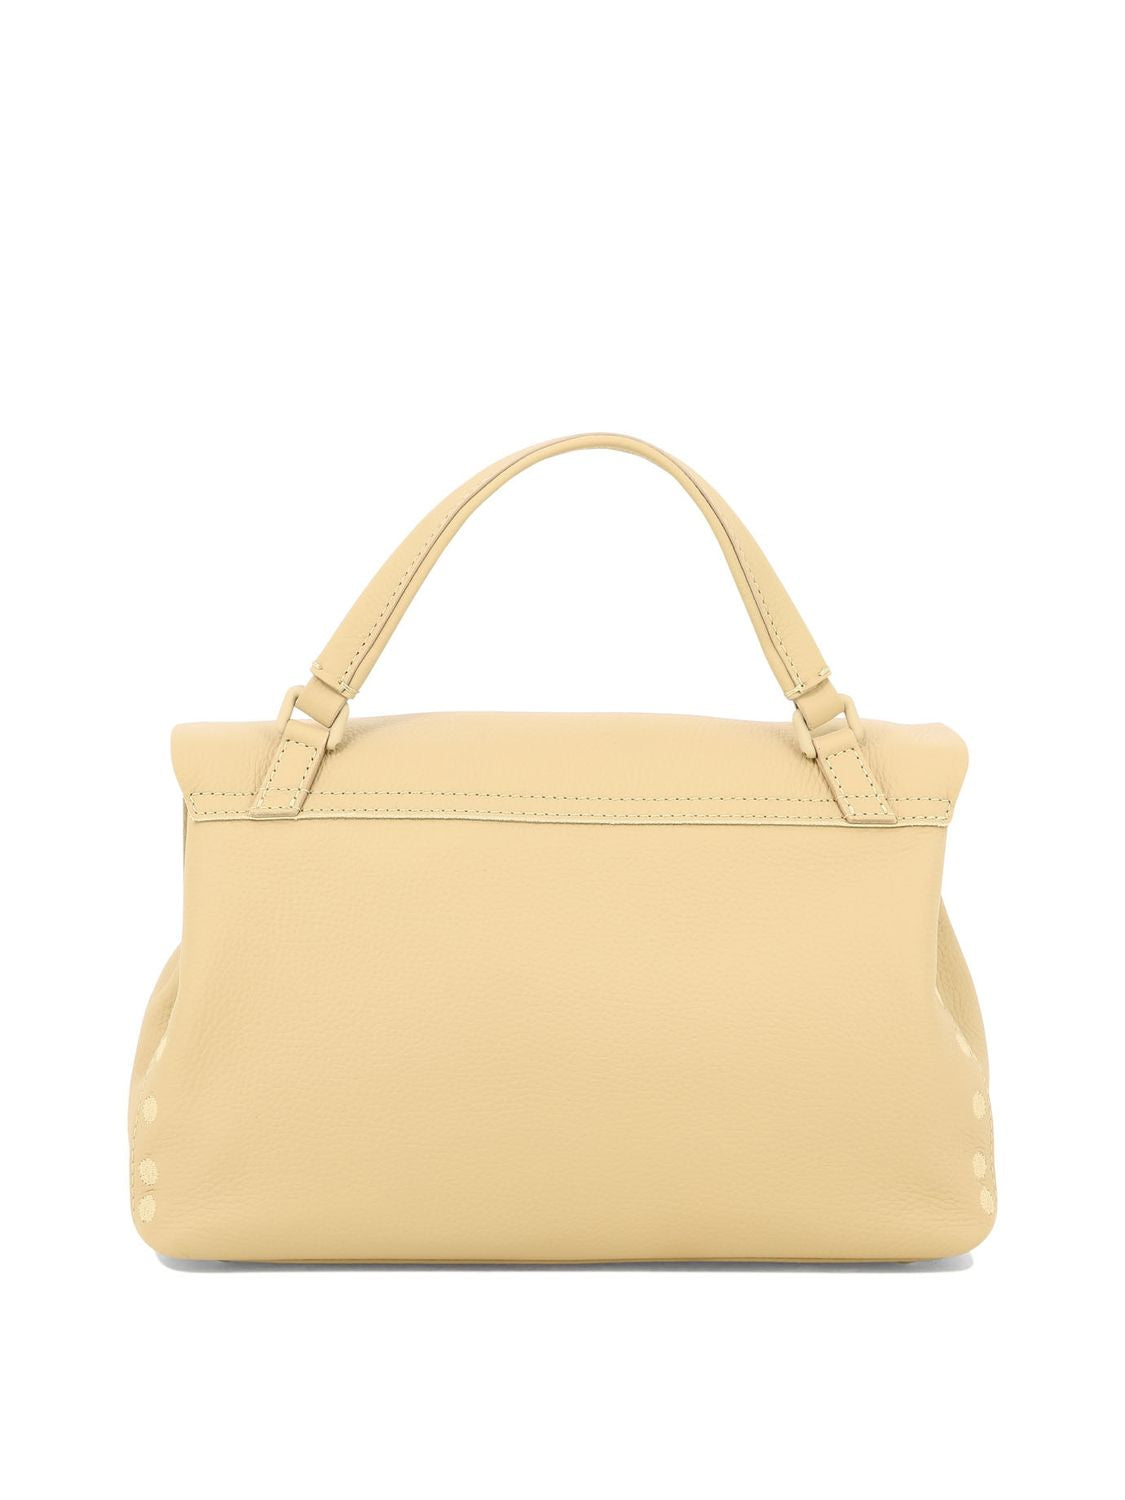 ZANELLATO Luxurious Tan Leather Handbag for Women